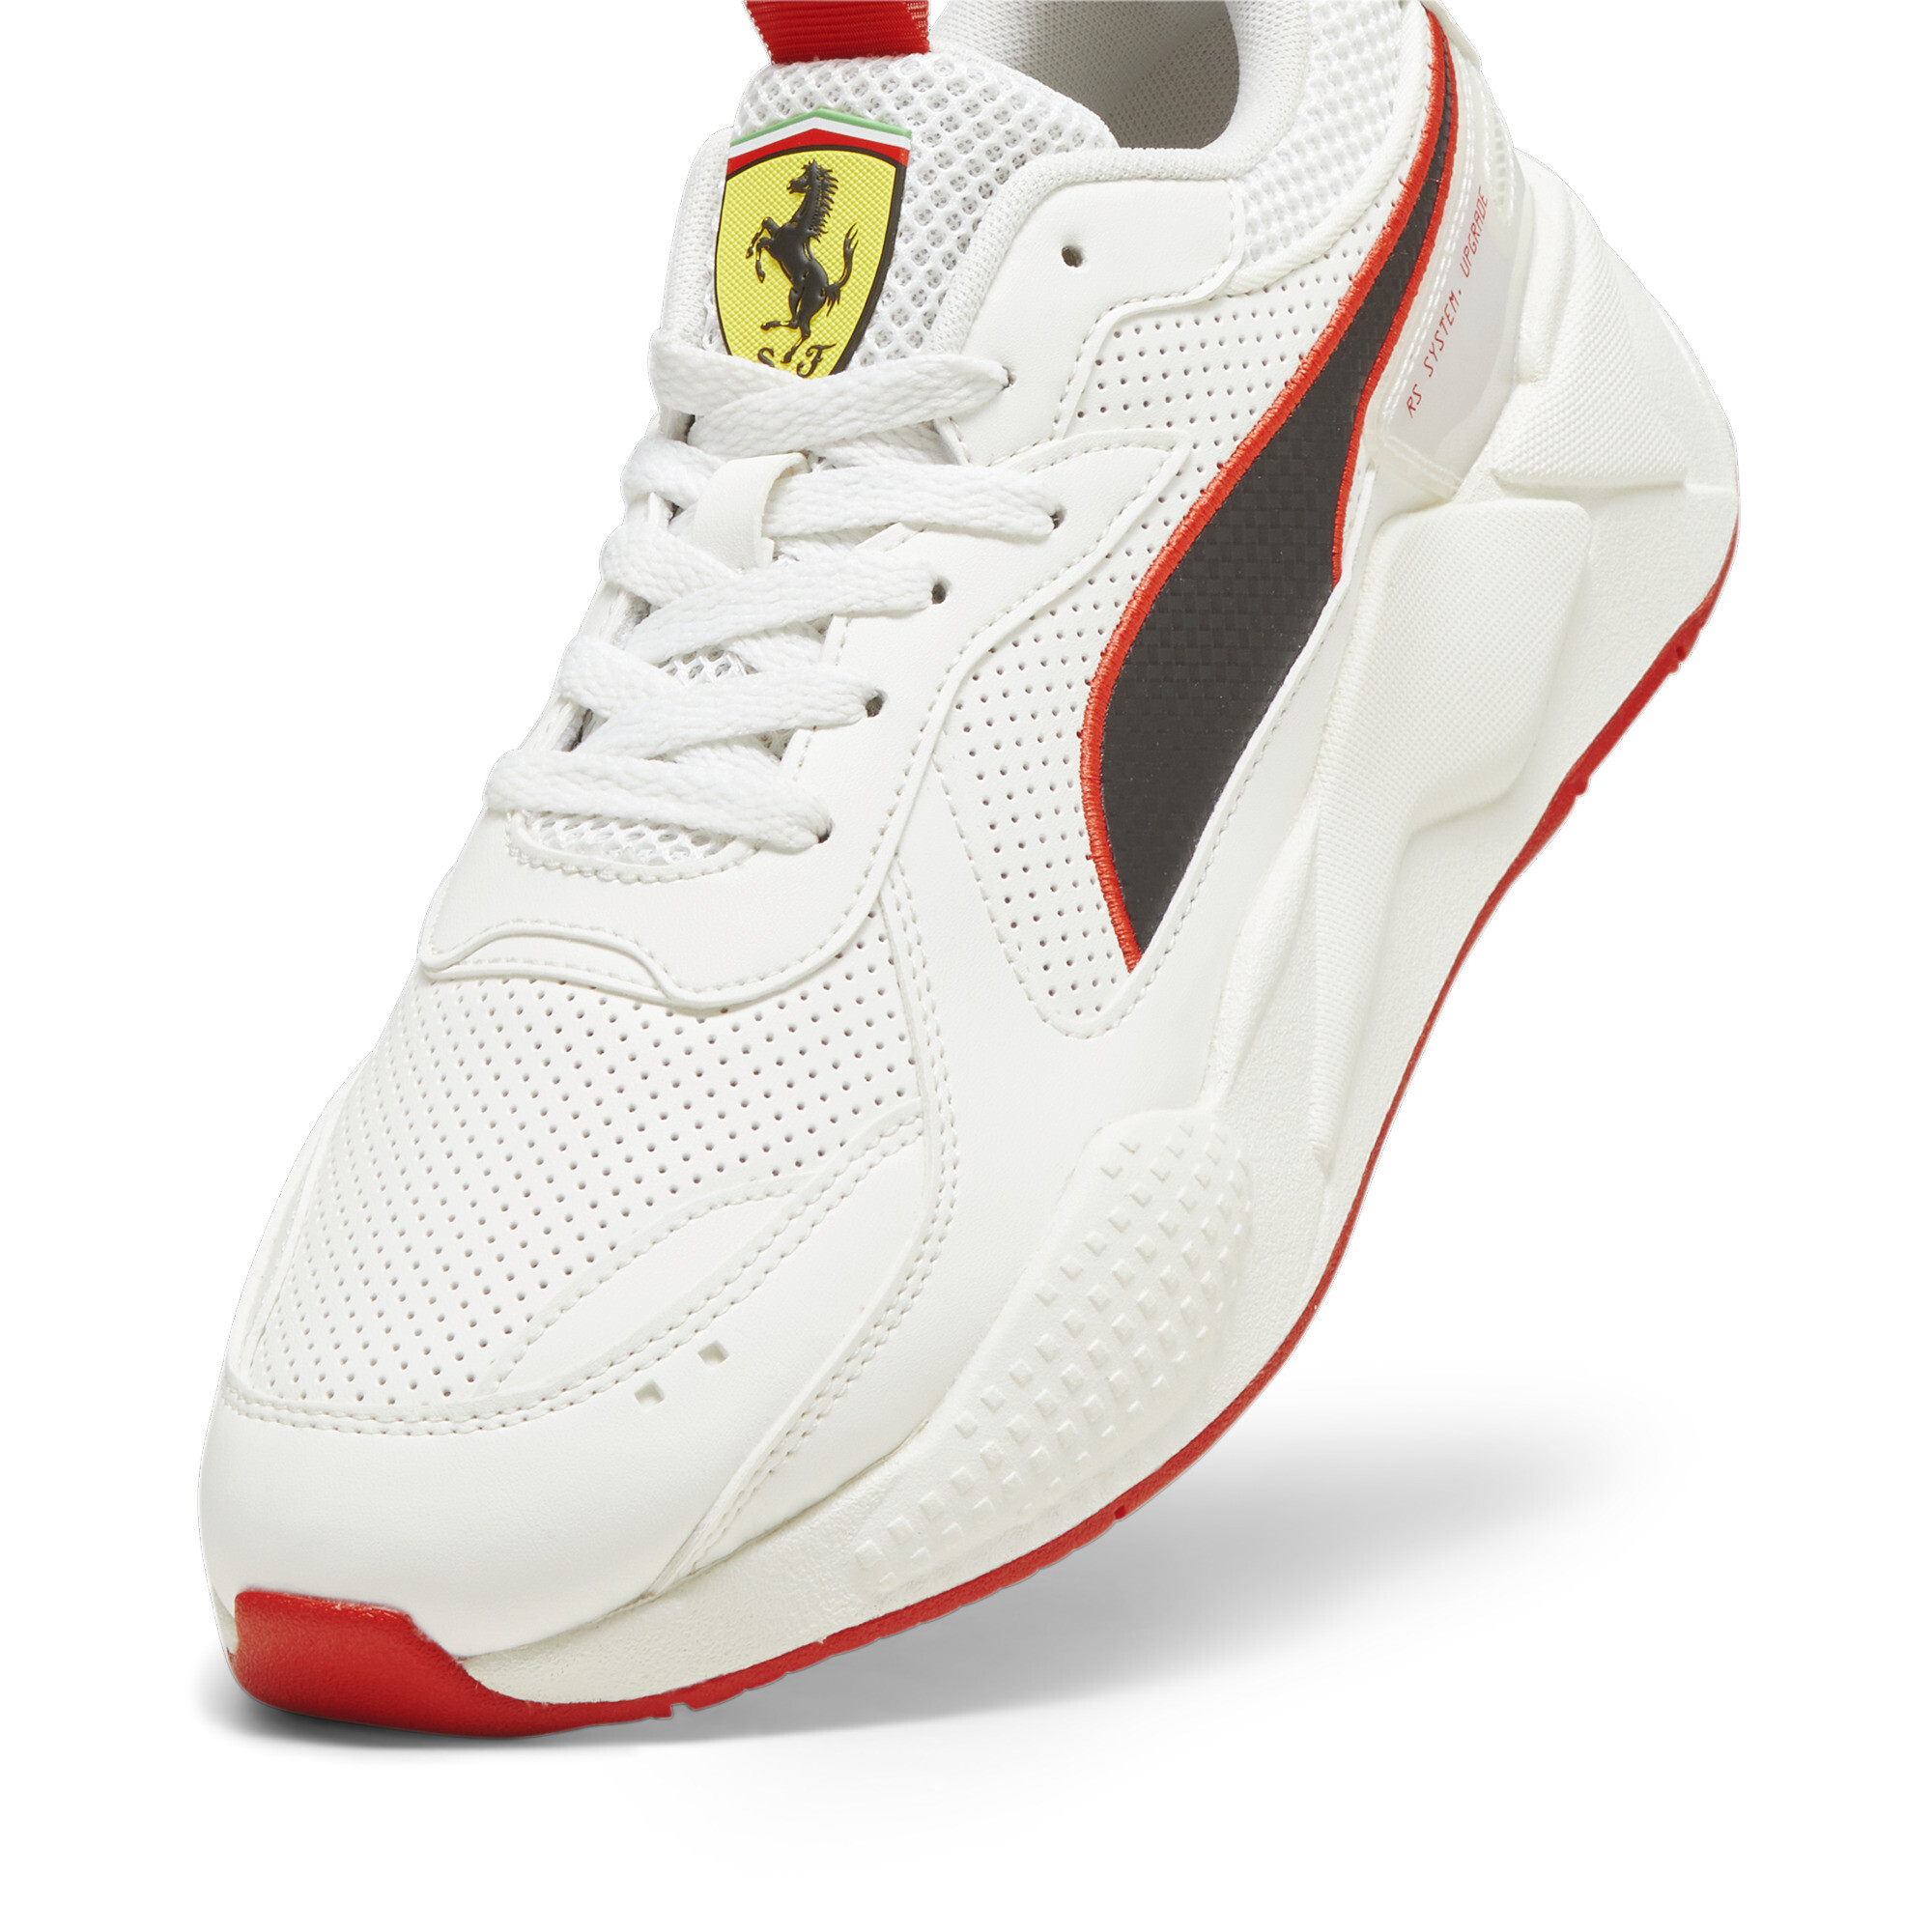 Men's Puma Scuderia Ferrari RS-X Sneakers, White, Size 36, Shoes